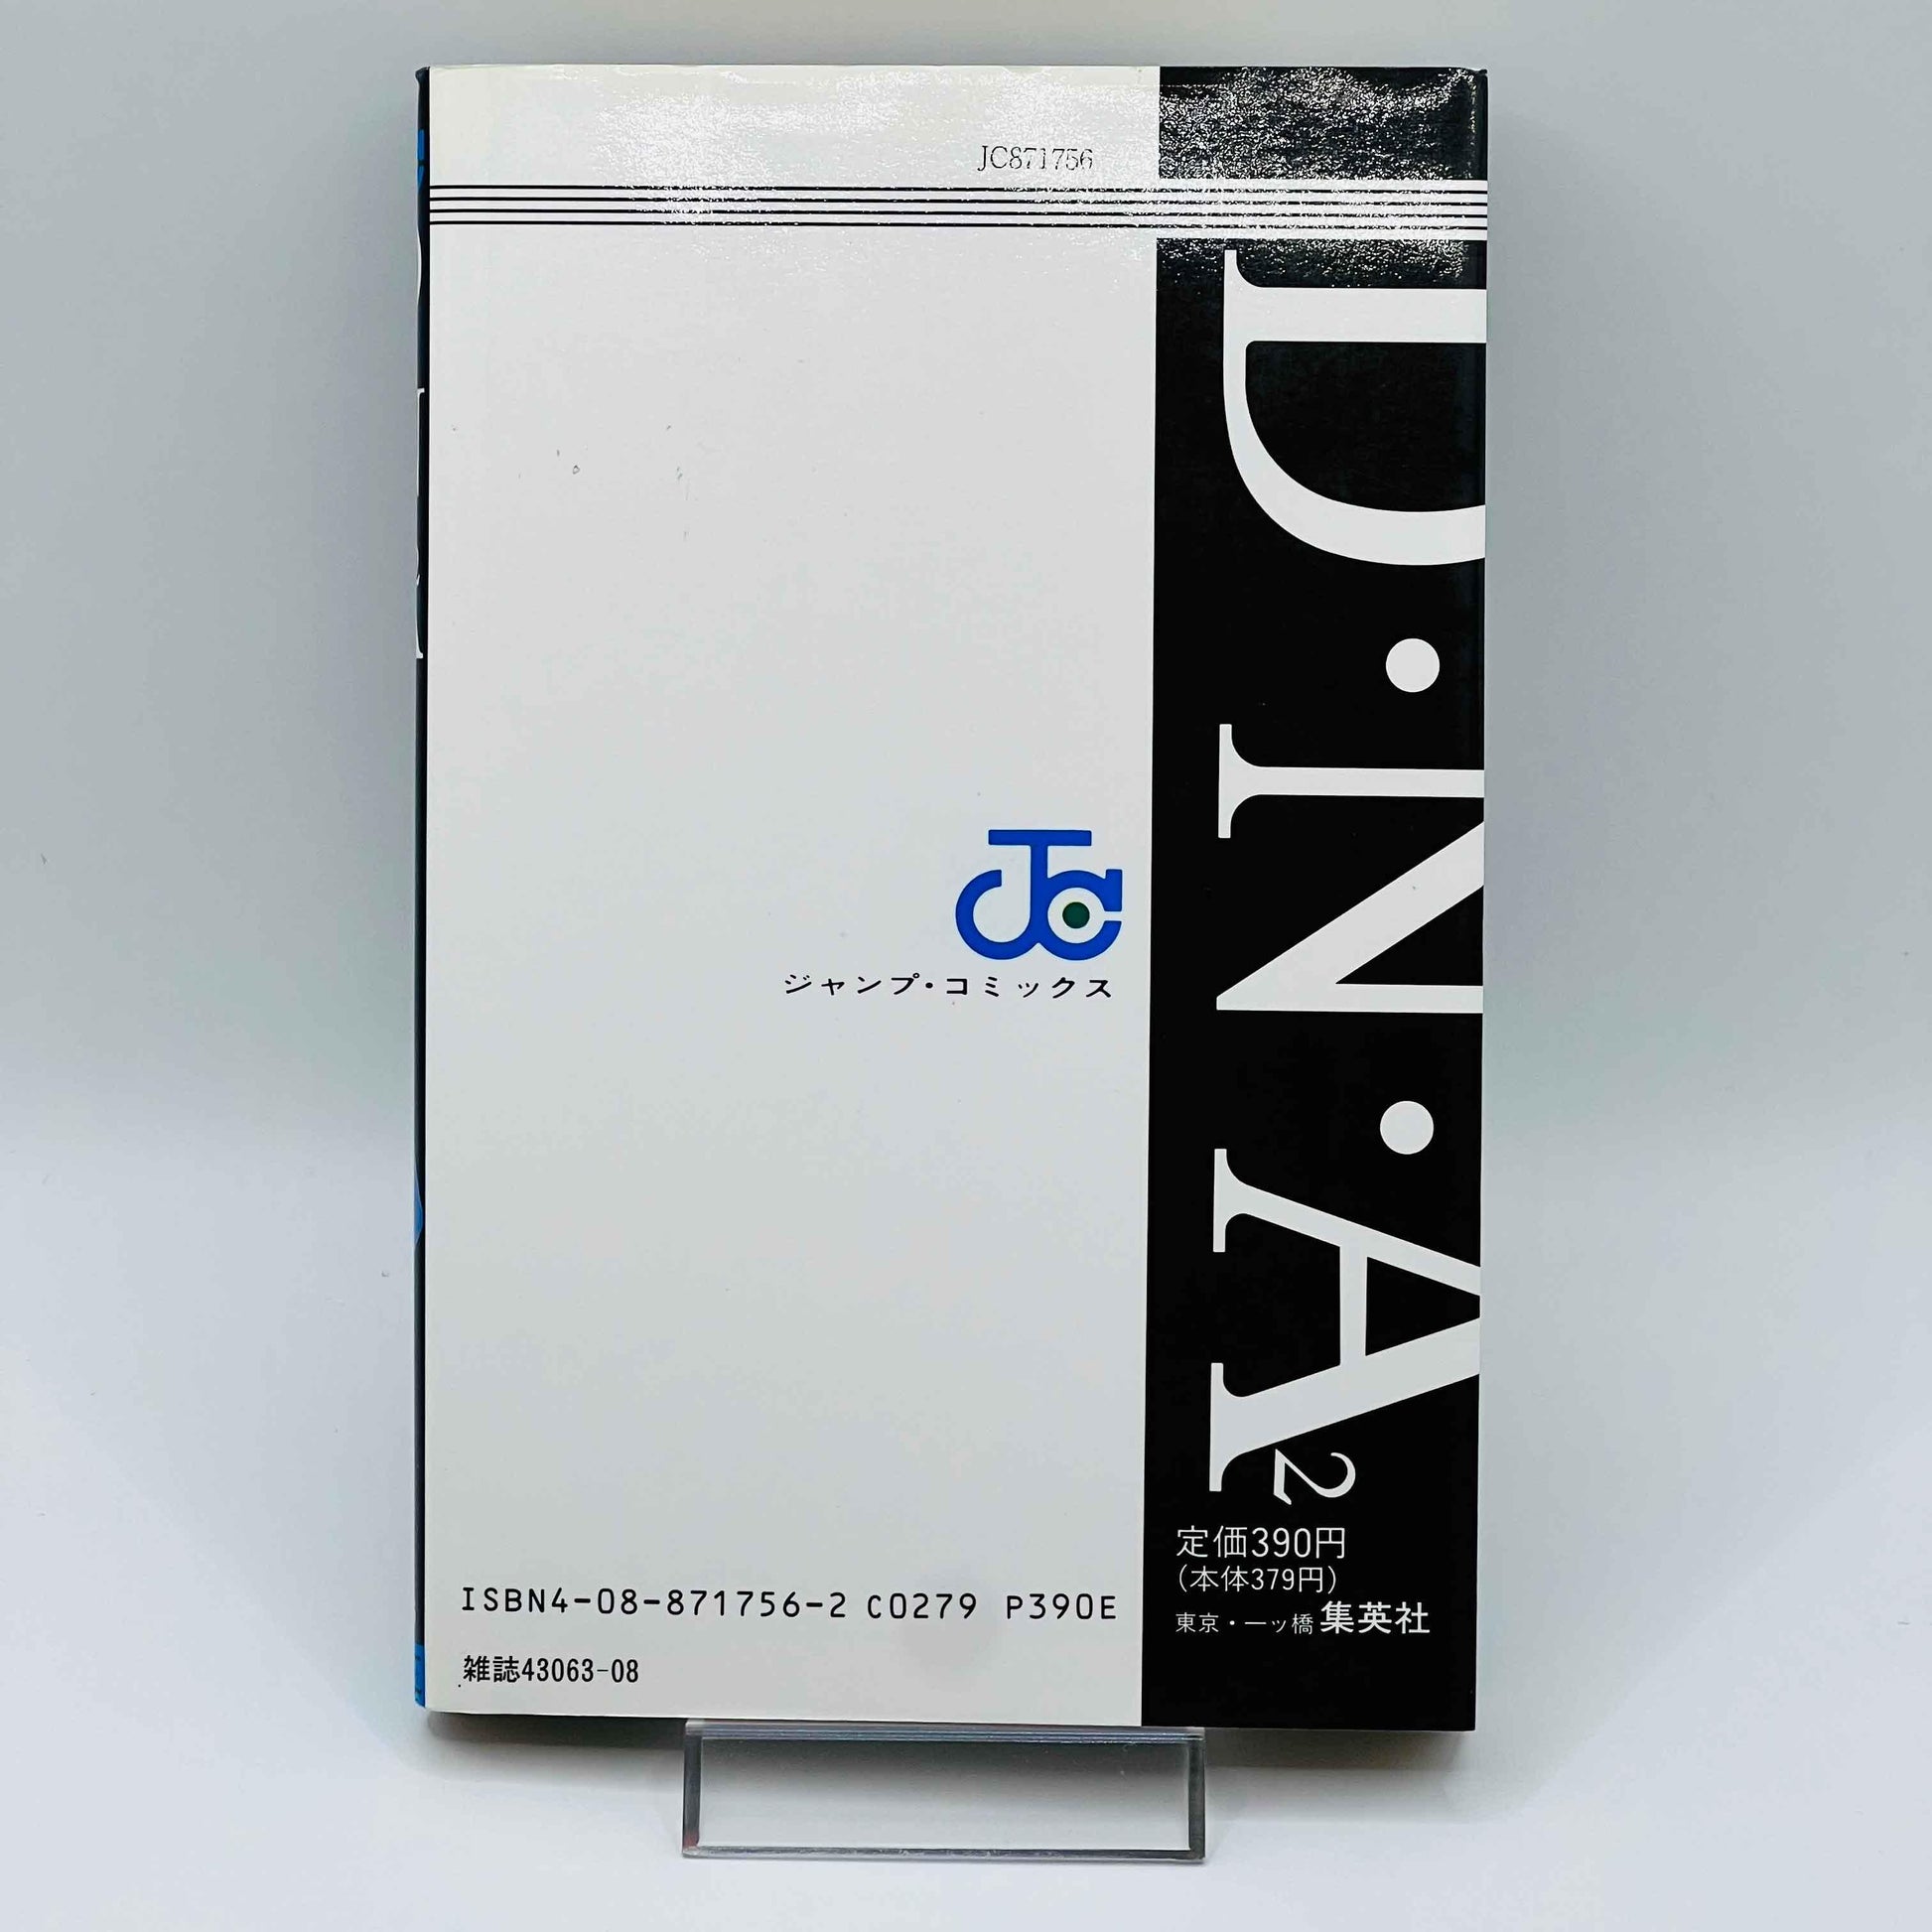 DNA² - Volume 01 - 1stPrint.net - 1st First Print Edition Manga Store - M-DNA-01-001